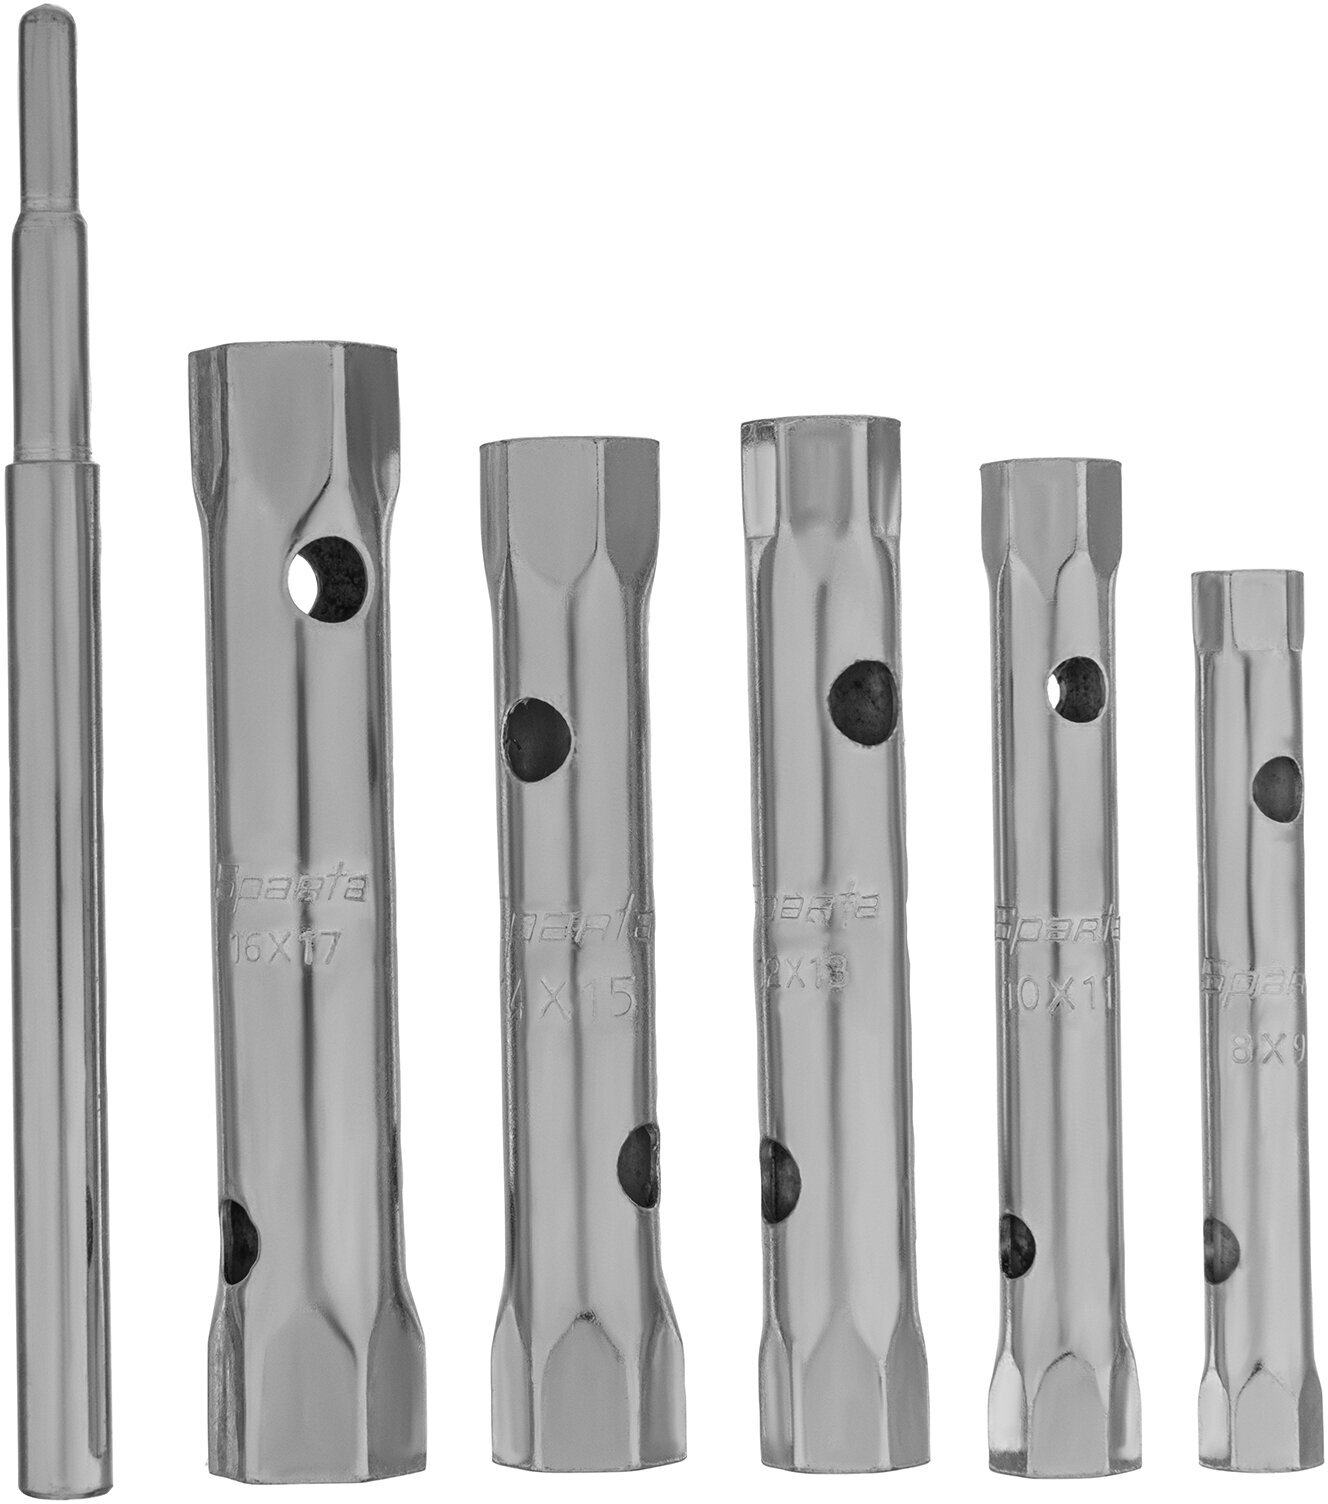 Набор ключей-трубок торцевых Sparta 8 х 17 мм, вороток, оцинкованные, 6 шт 137405